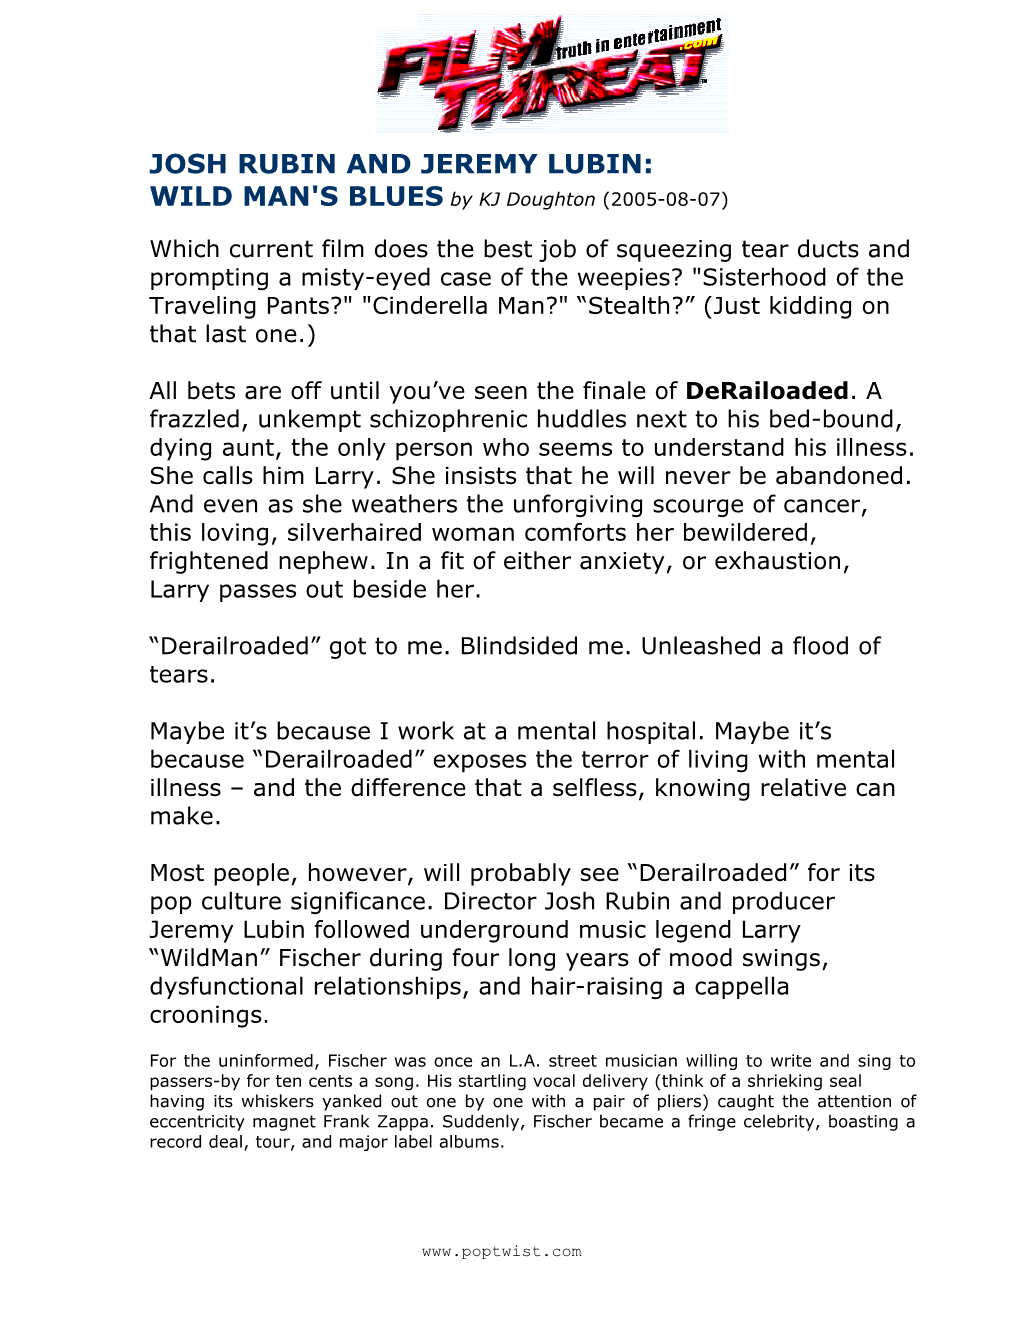 JOSH RUBIN and JEREMY LUBIN: WILD MAN's BLUES by KJ Doughton (2005-08-07)